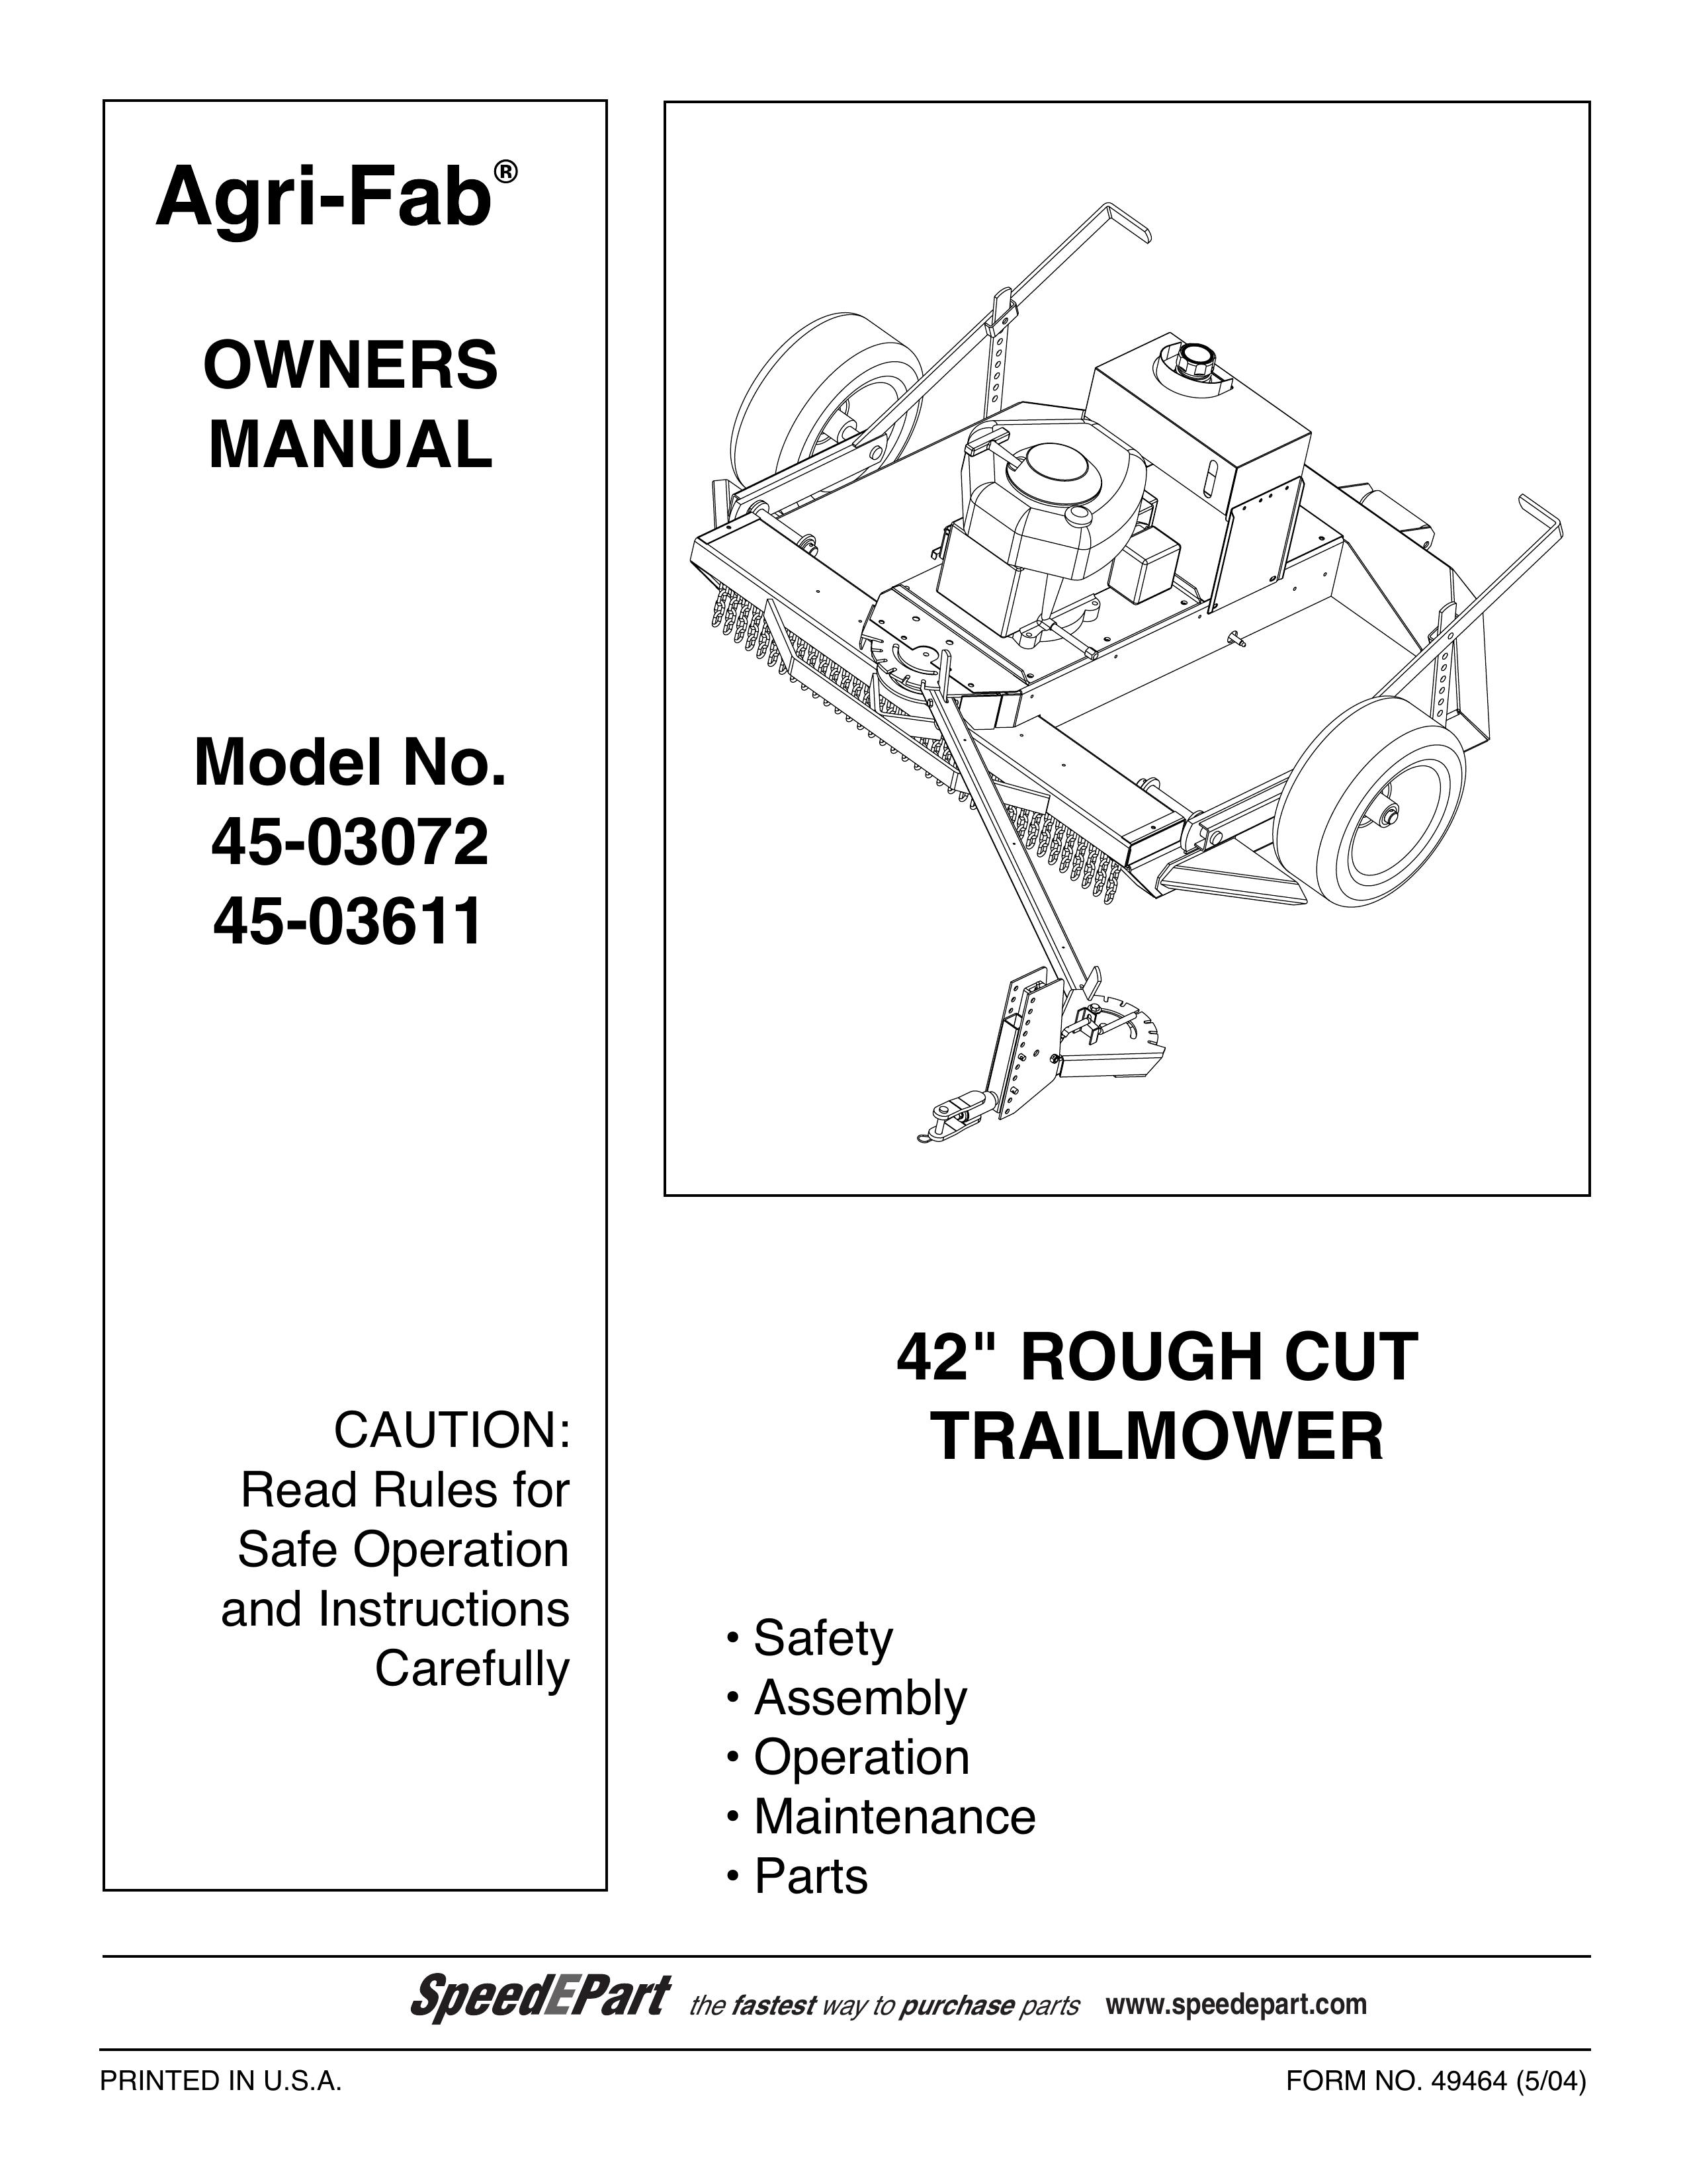 Agri-Fab 45-0361 Lawn Mower User Manual